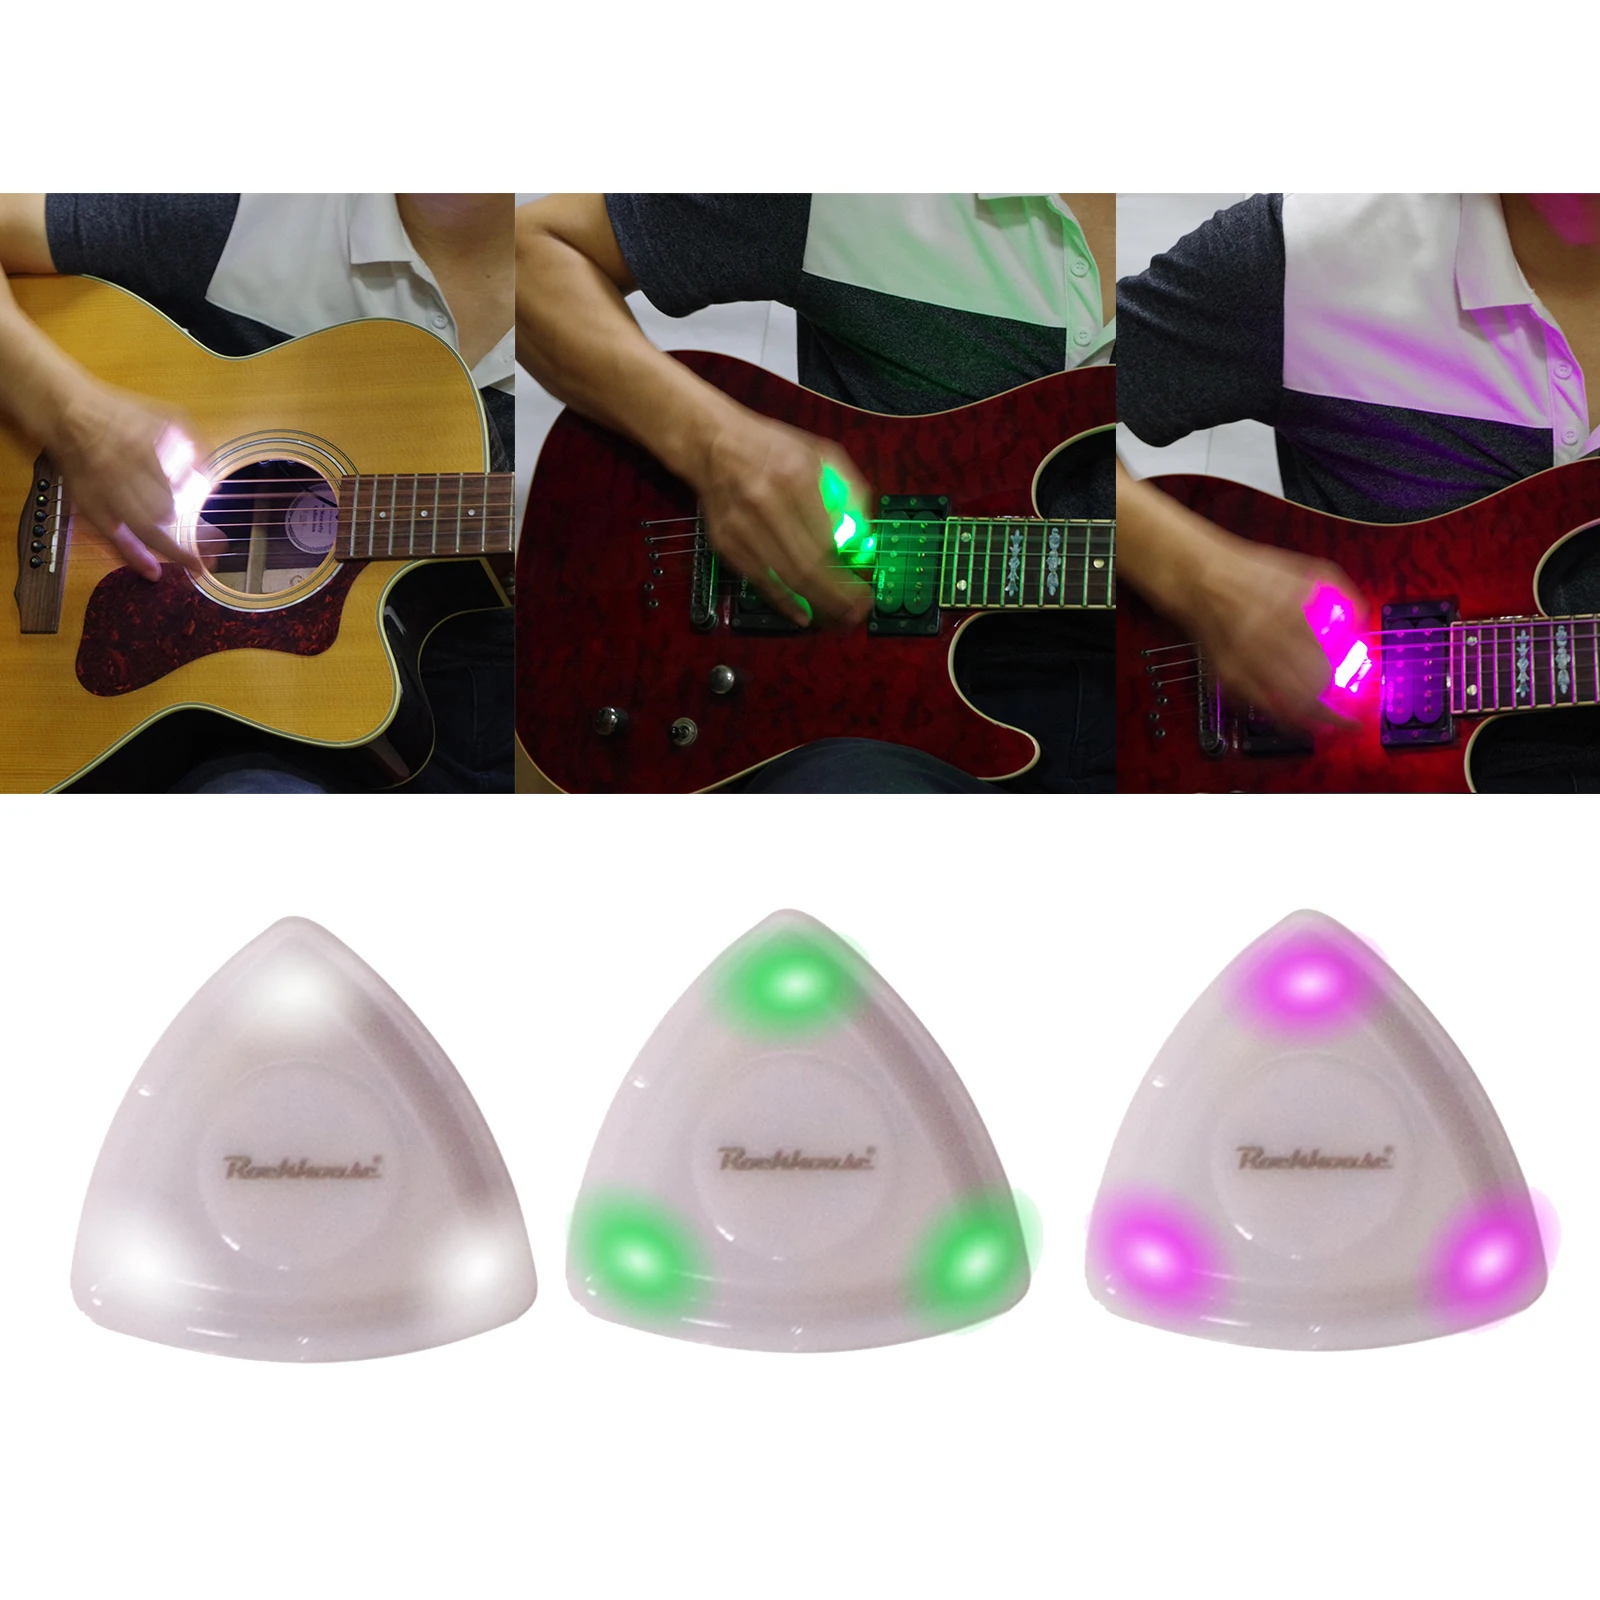 New Shining Picks Non-slip Guitar Pick Jazz Plectrum For Electric Acoustic Guitar Bass Folk Colored Light Bling